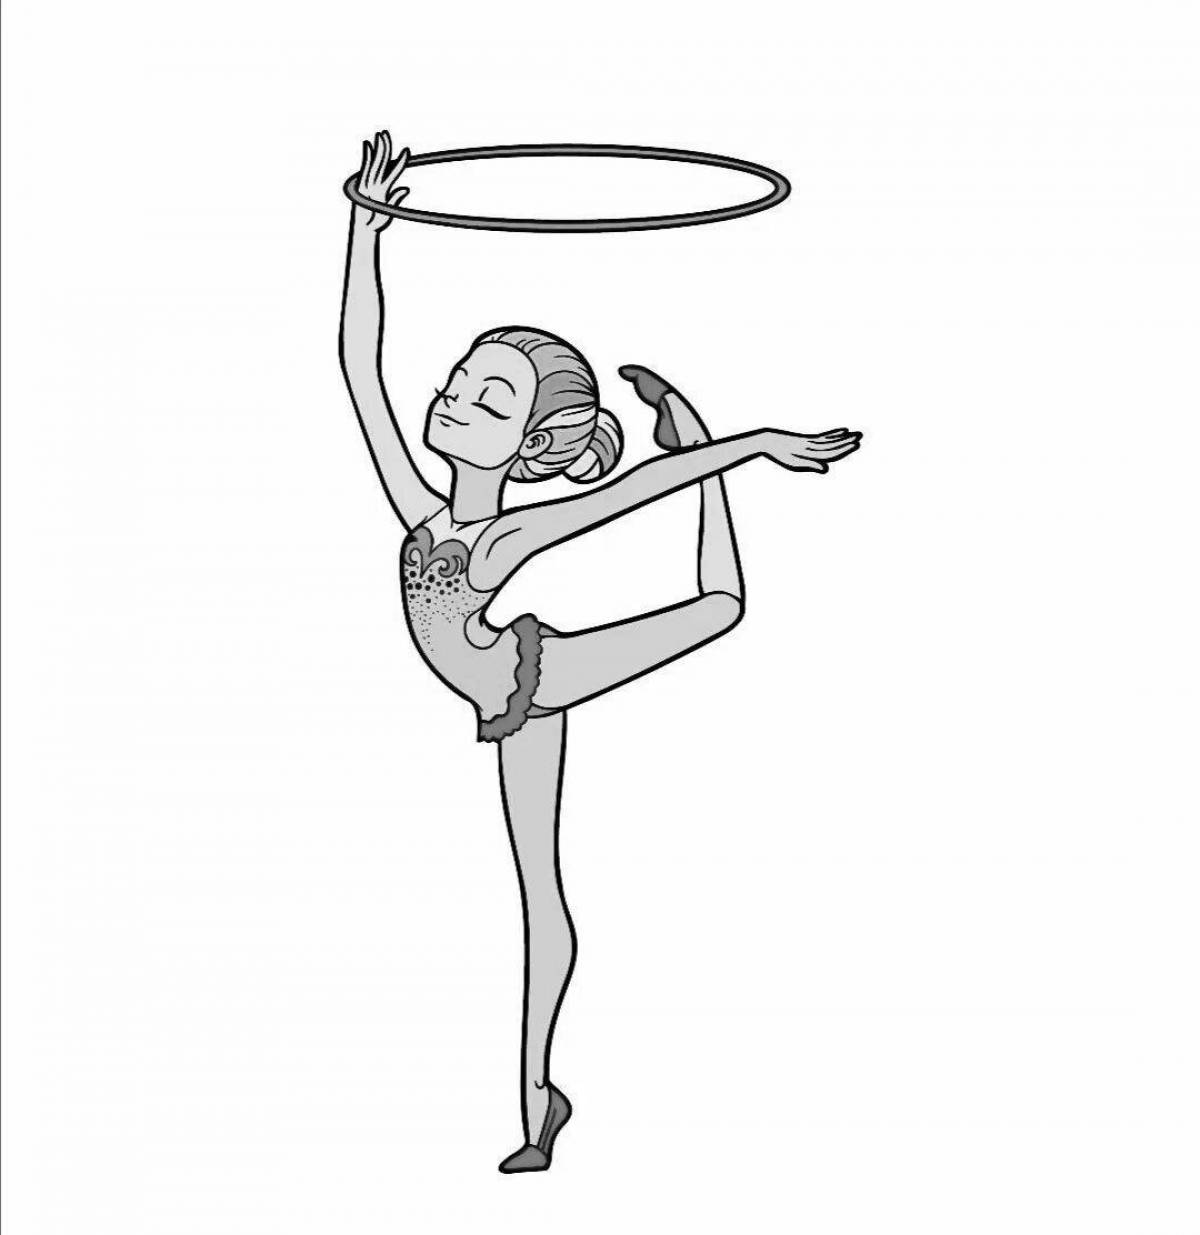 Nimble gymnast with a hoop